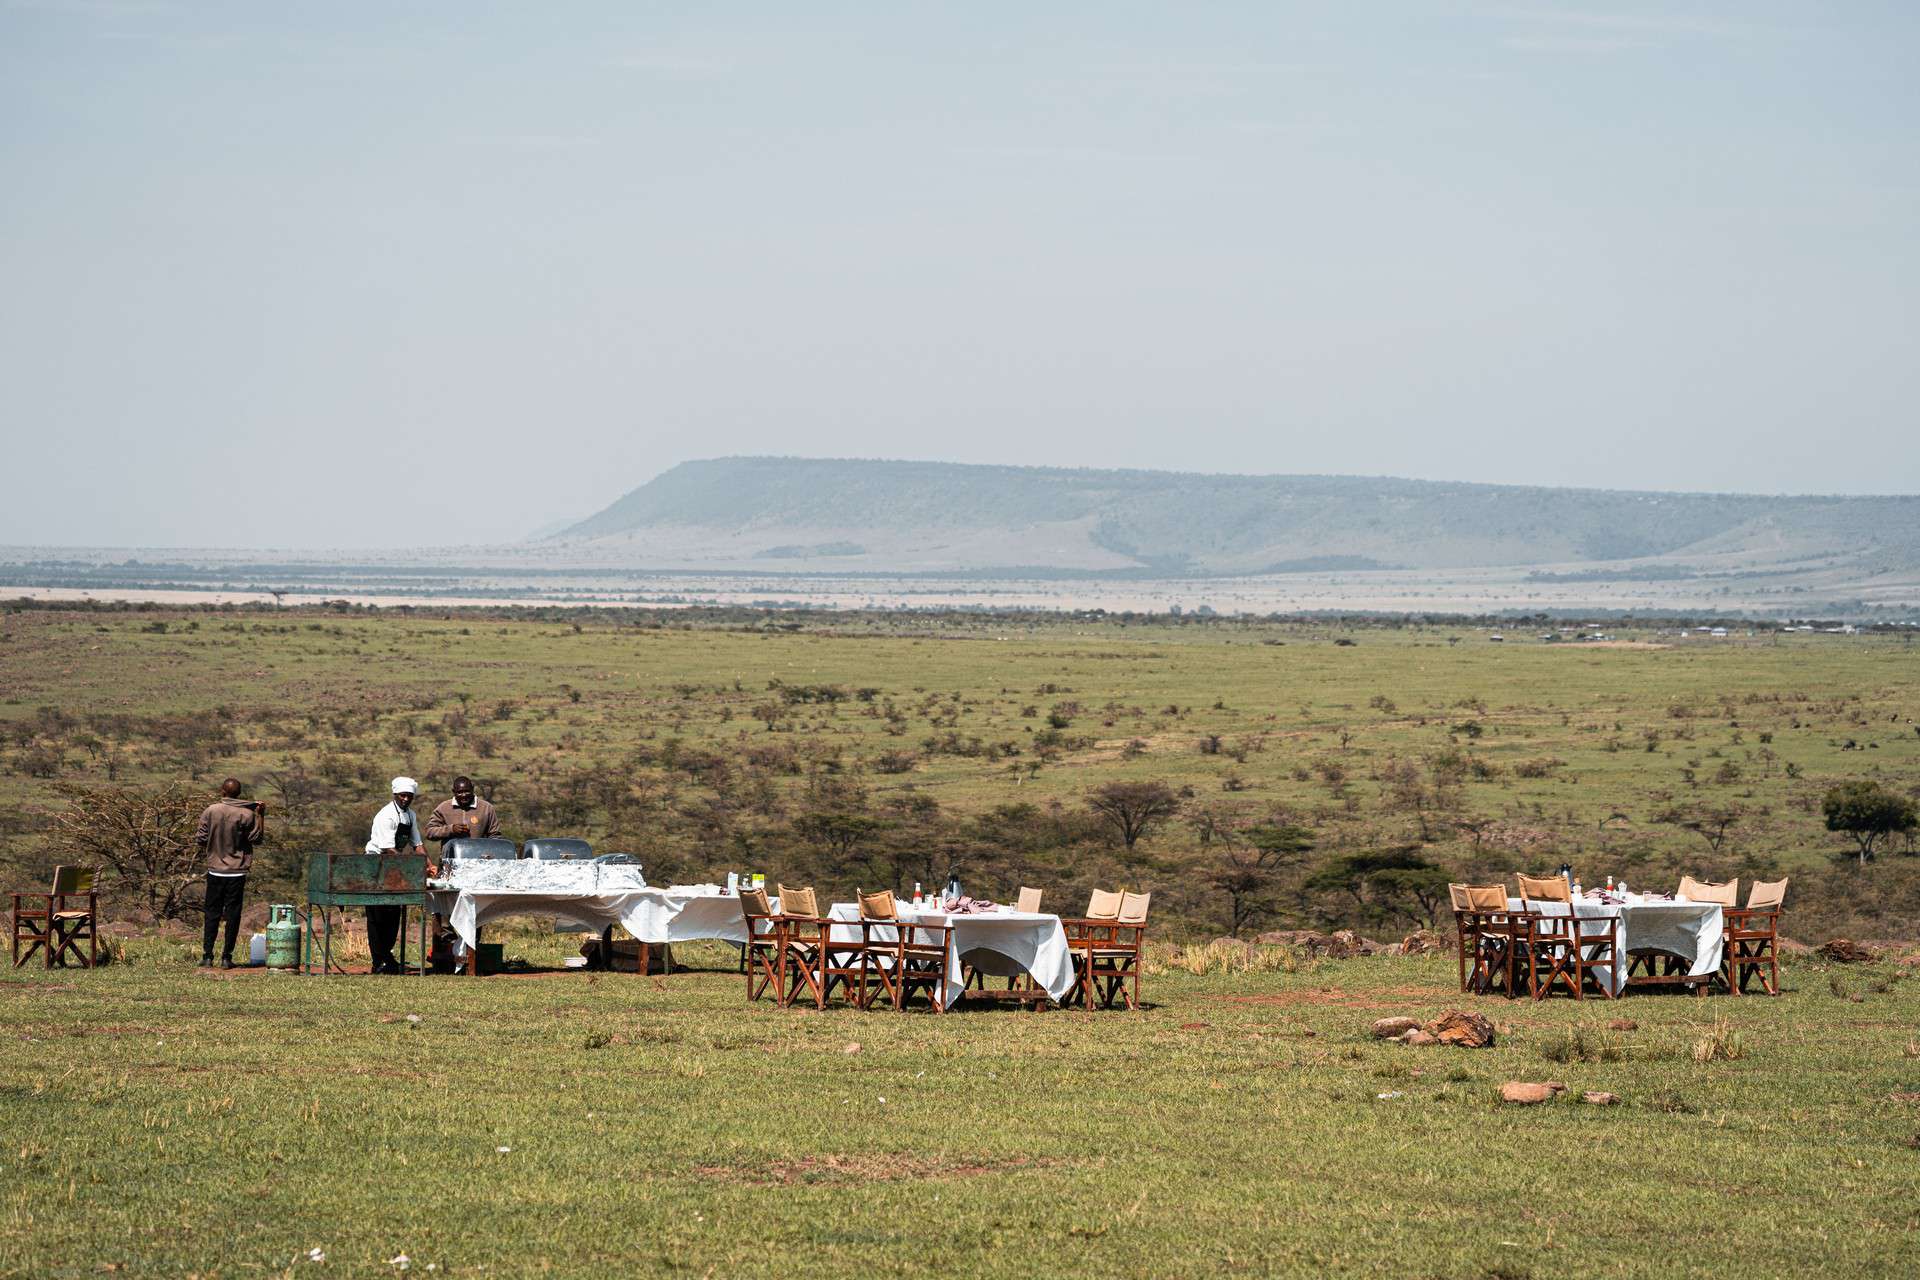 Safari breakfast in Masai Mara, Kenya. The East African Series photo album